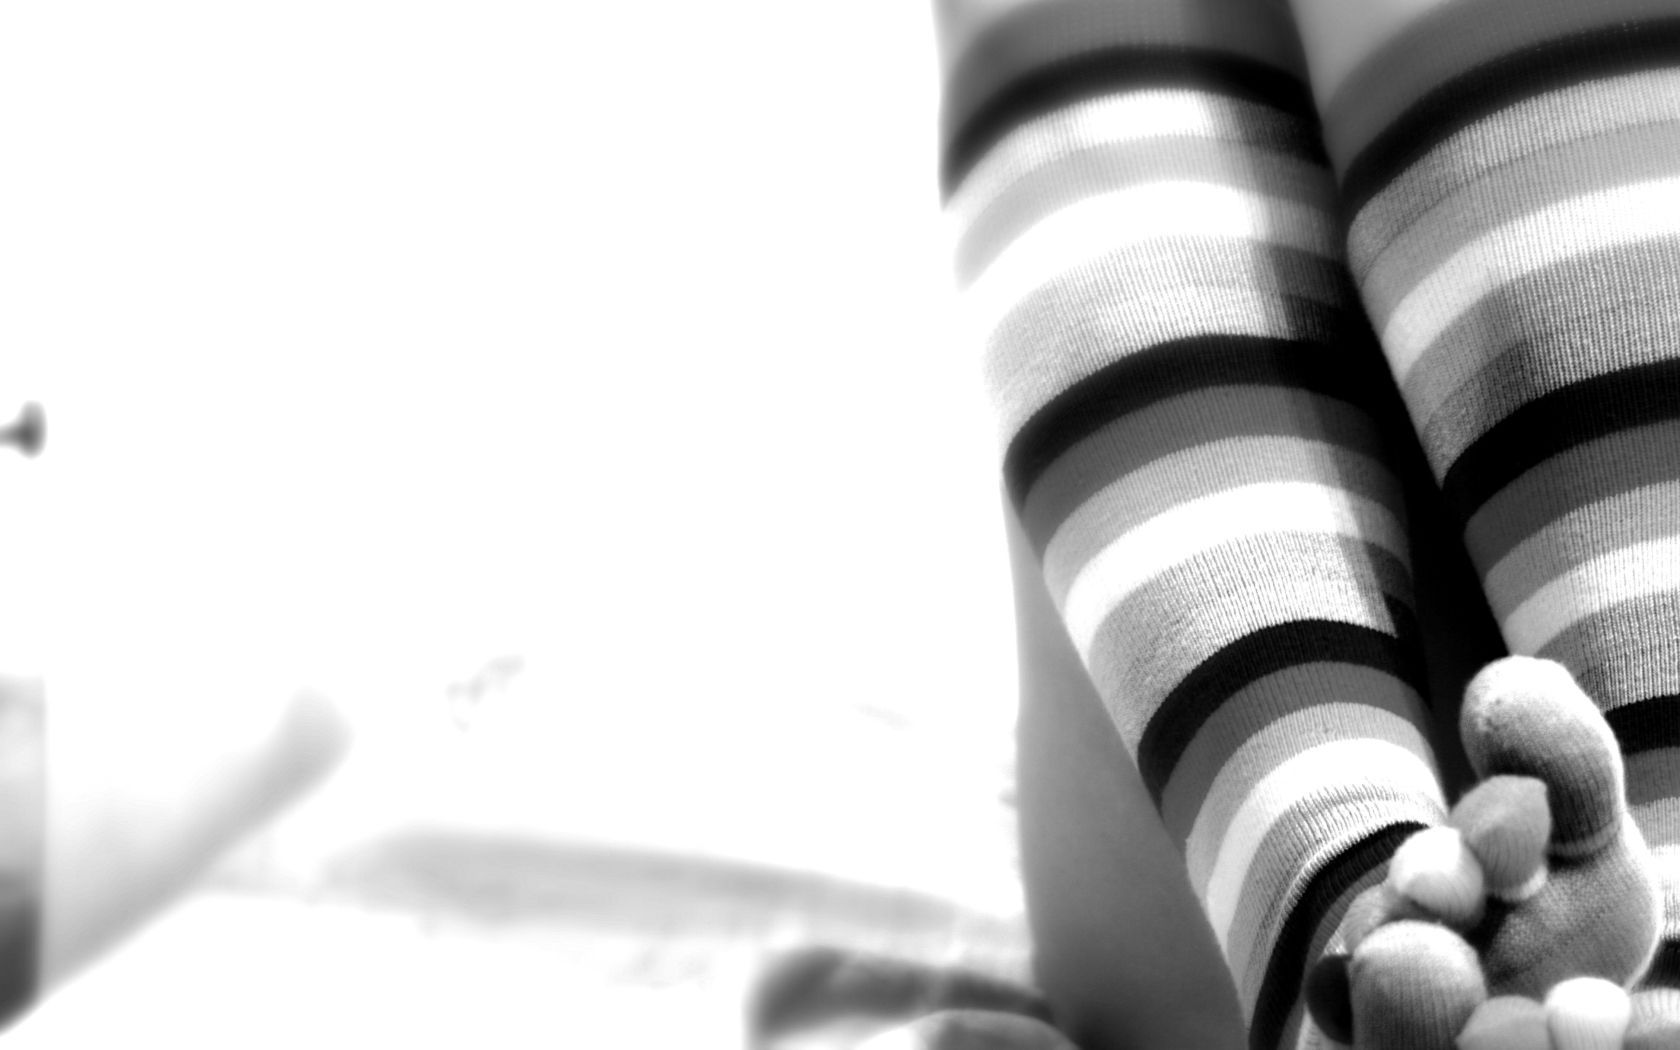 Feet grayscale monochrome socks striped clothing wallpaper ...